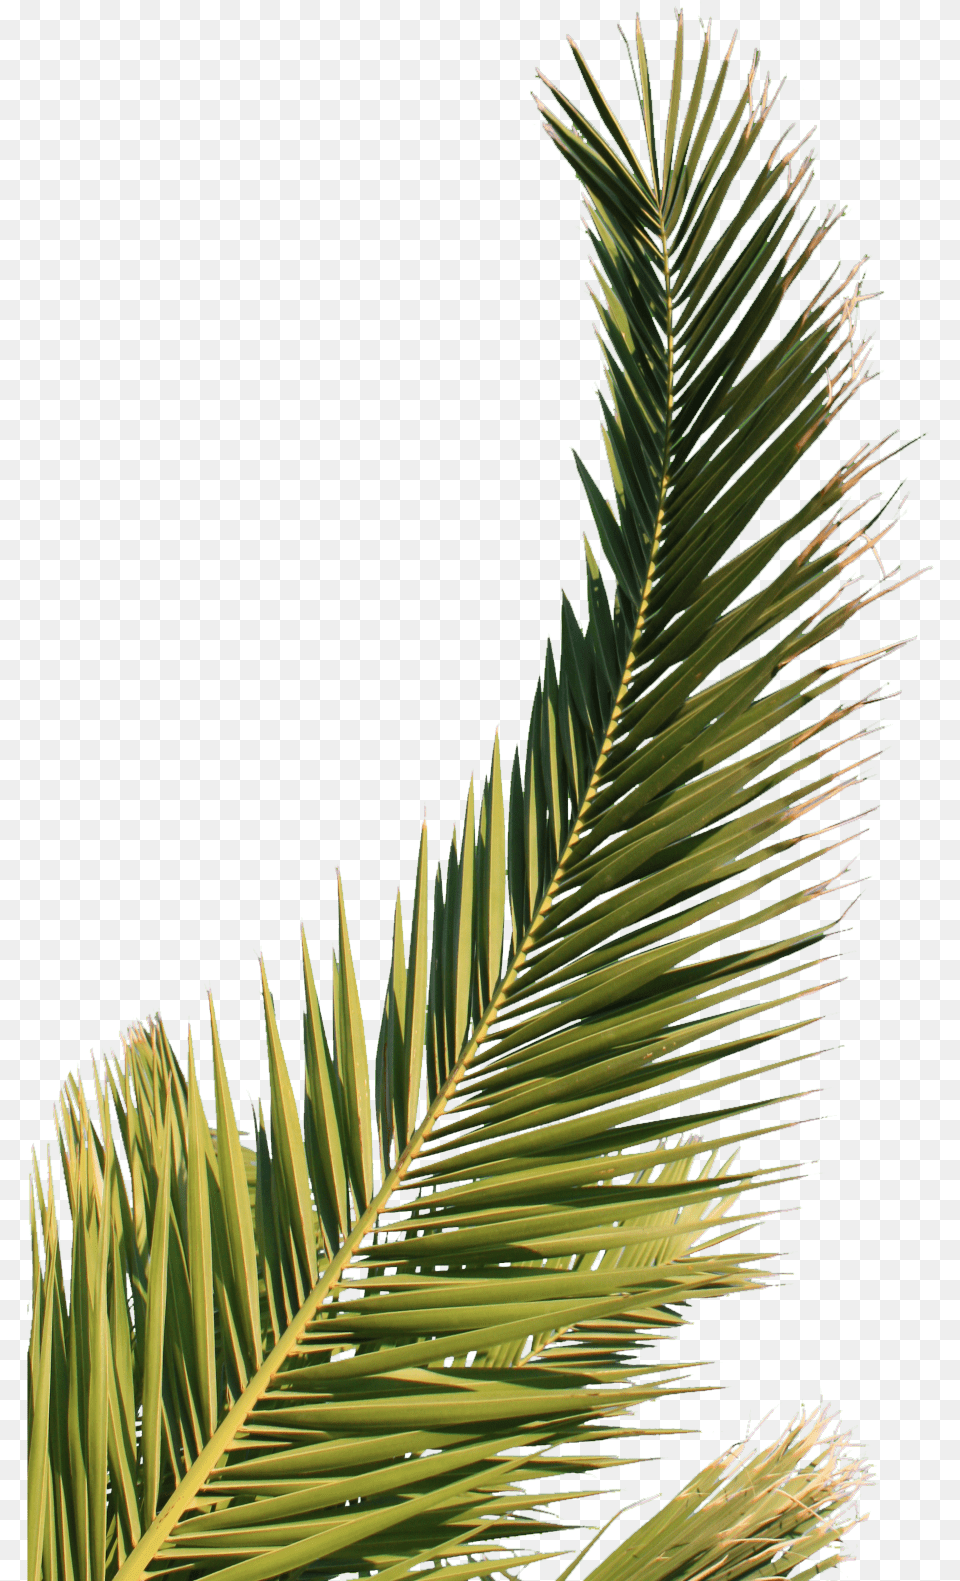 Palm Tree Leaf Download Palm Tree, Fir, Palm Tree, Plant, Conifer Free Transparent Png